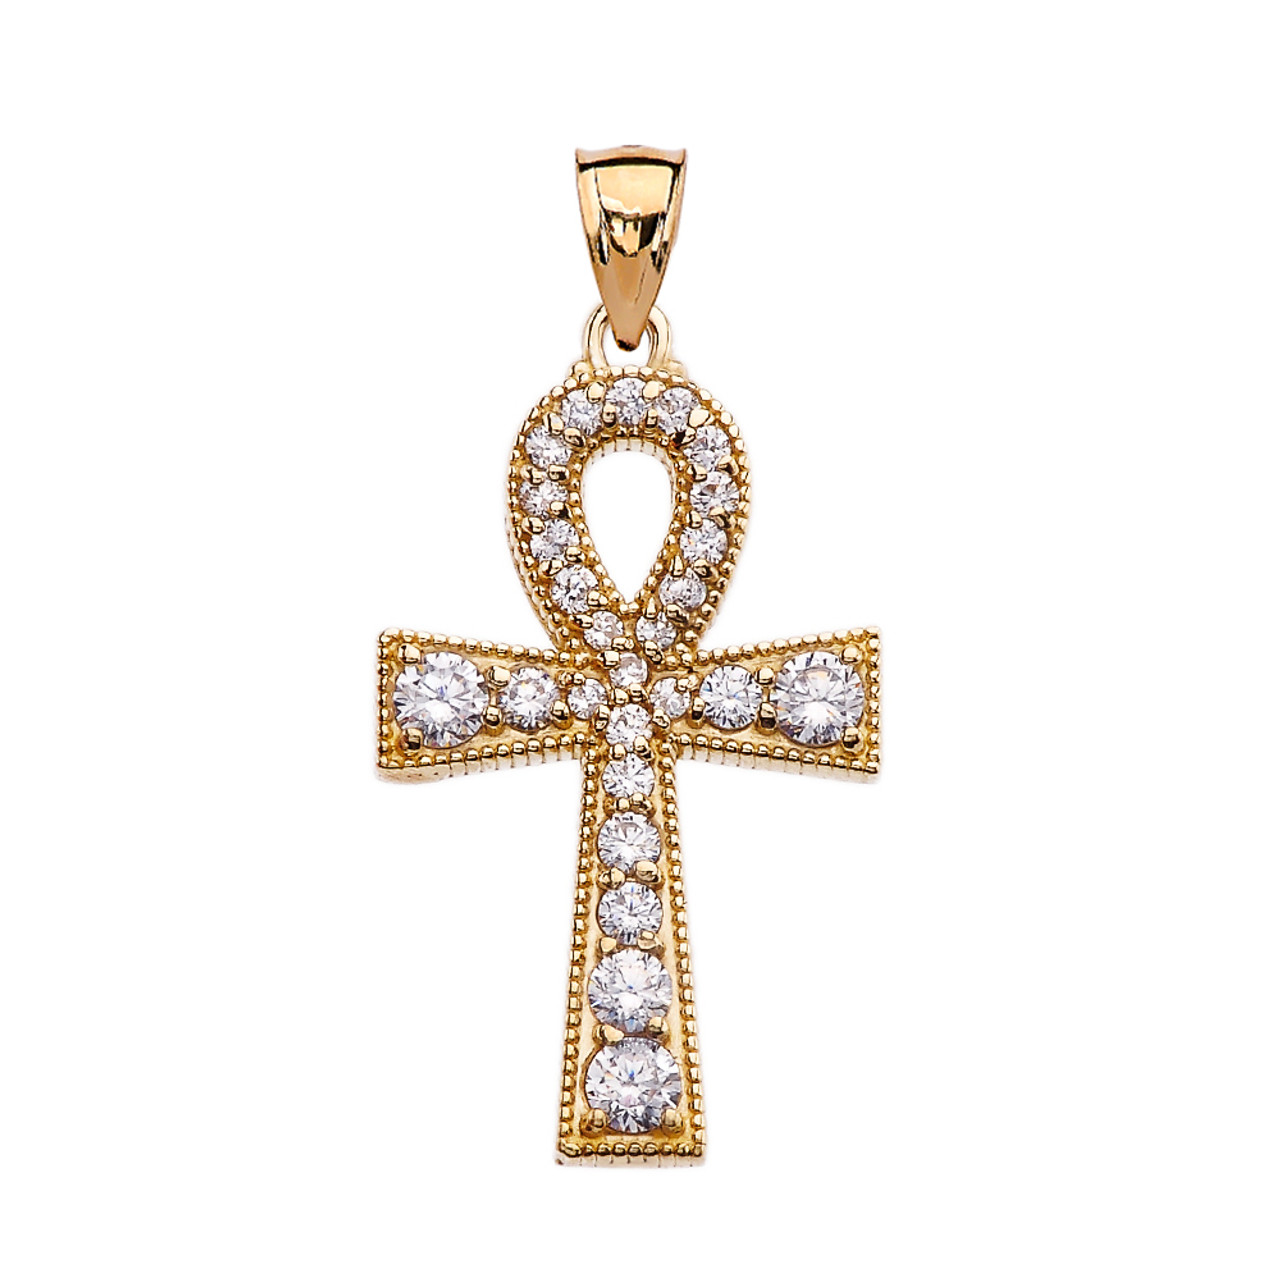 Amazon.com: Ioka 14K Yellow Gold Egyptian Ankh Cross Religious Charm Pendant  with 0.8mm Box Chain Necklace - 16